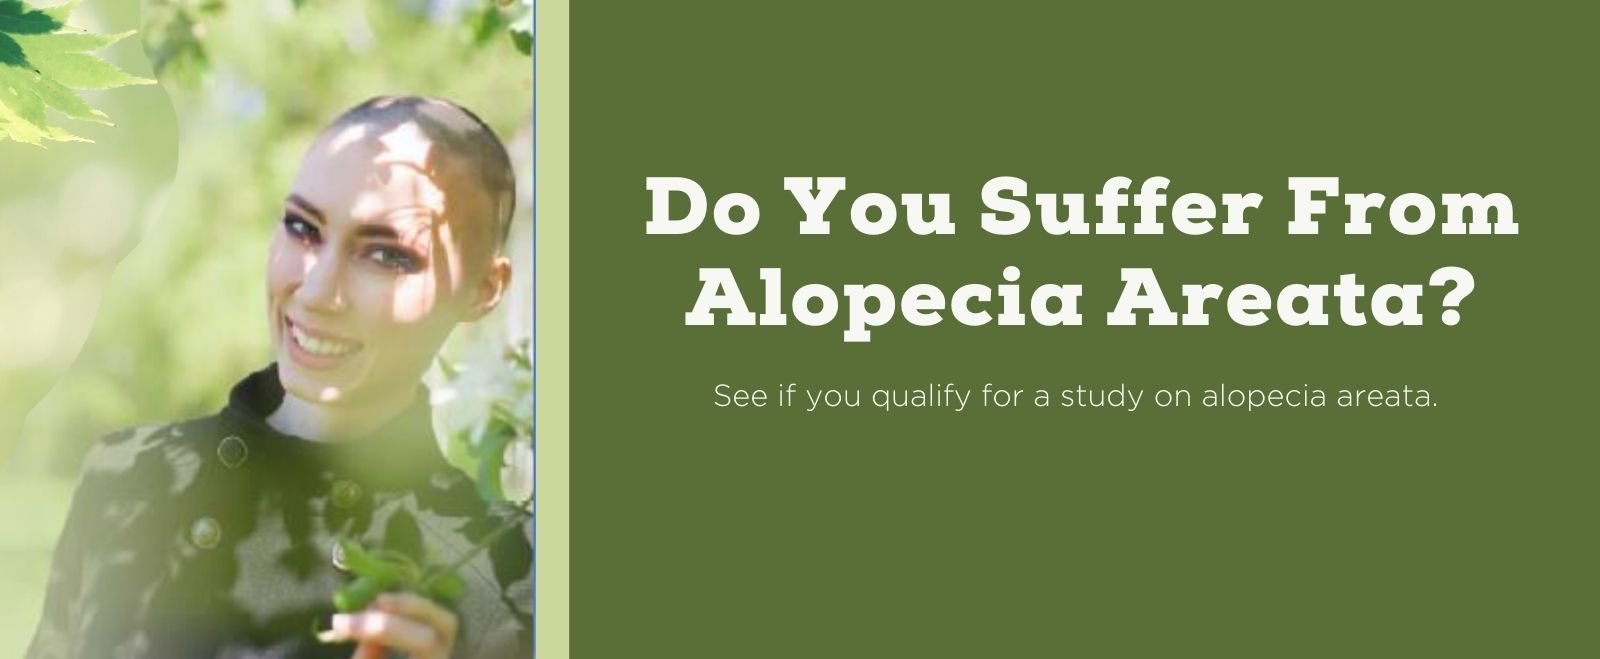 Do You Suffer From Alopecia Areata